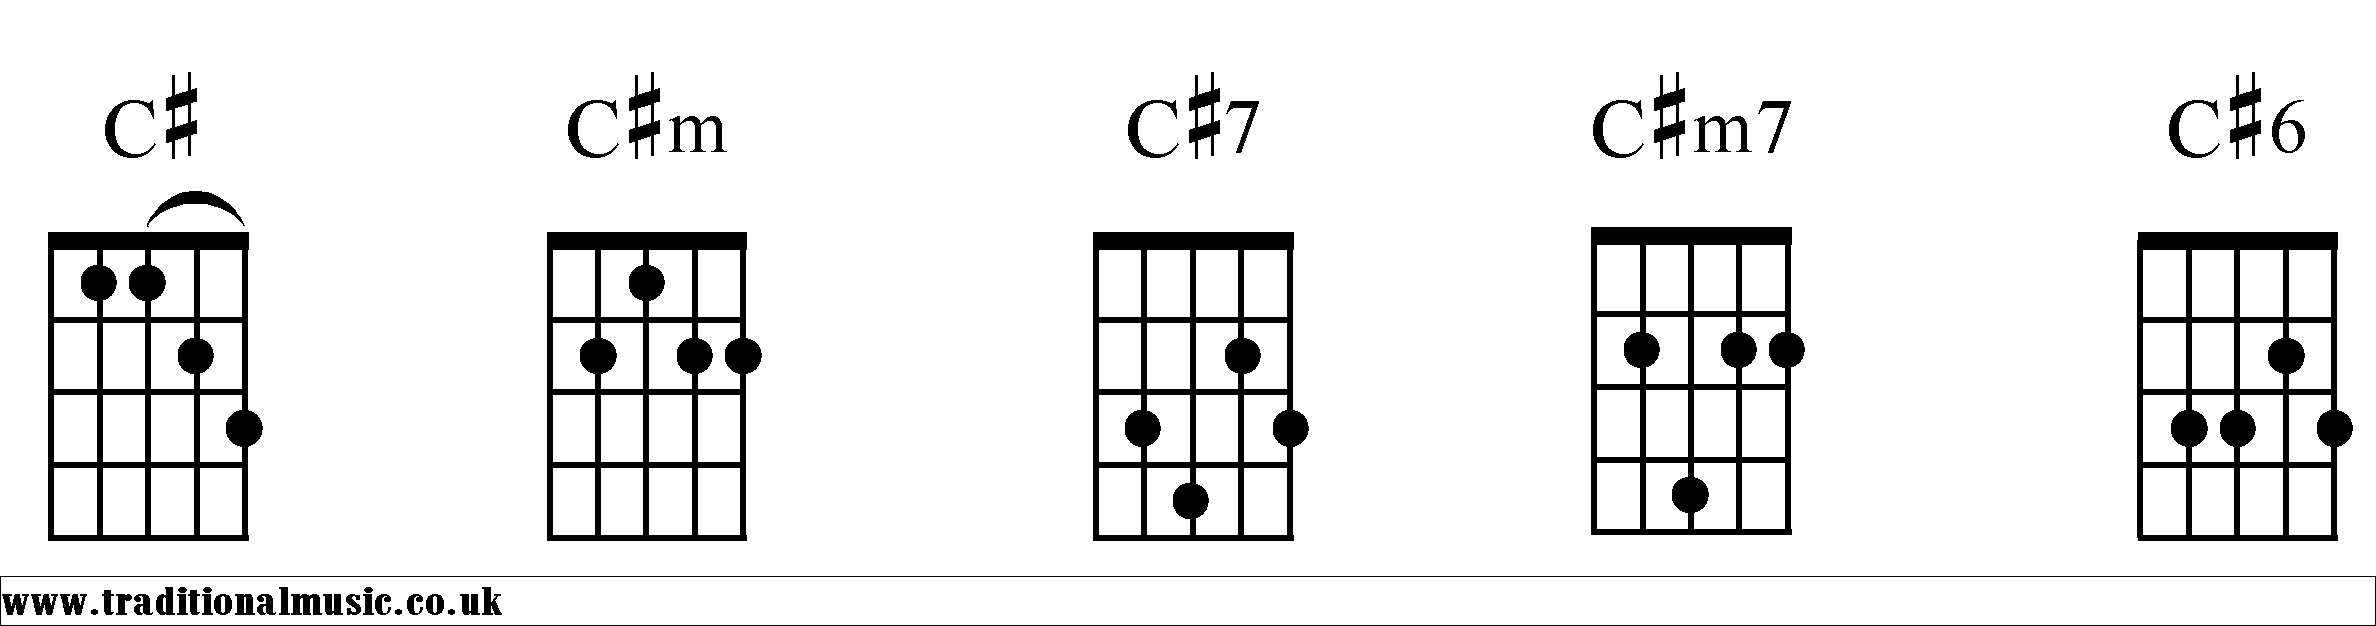 C# Chords diagrams Banjo 1